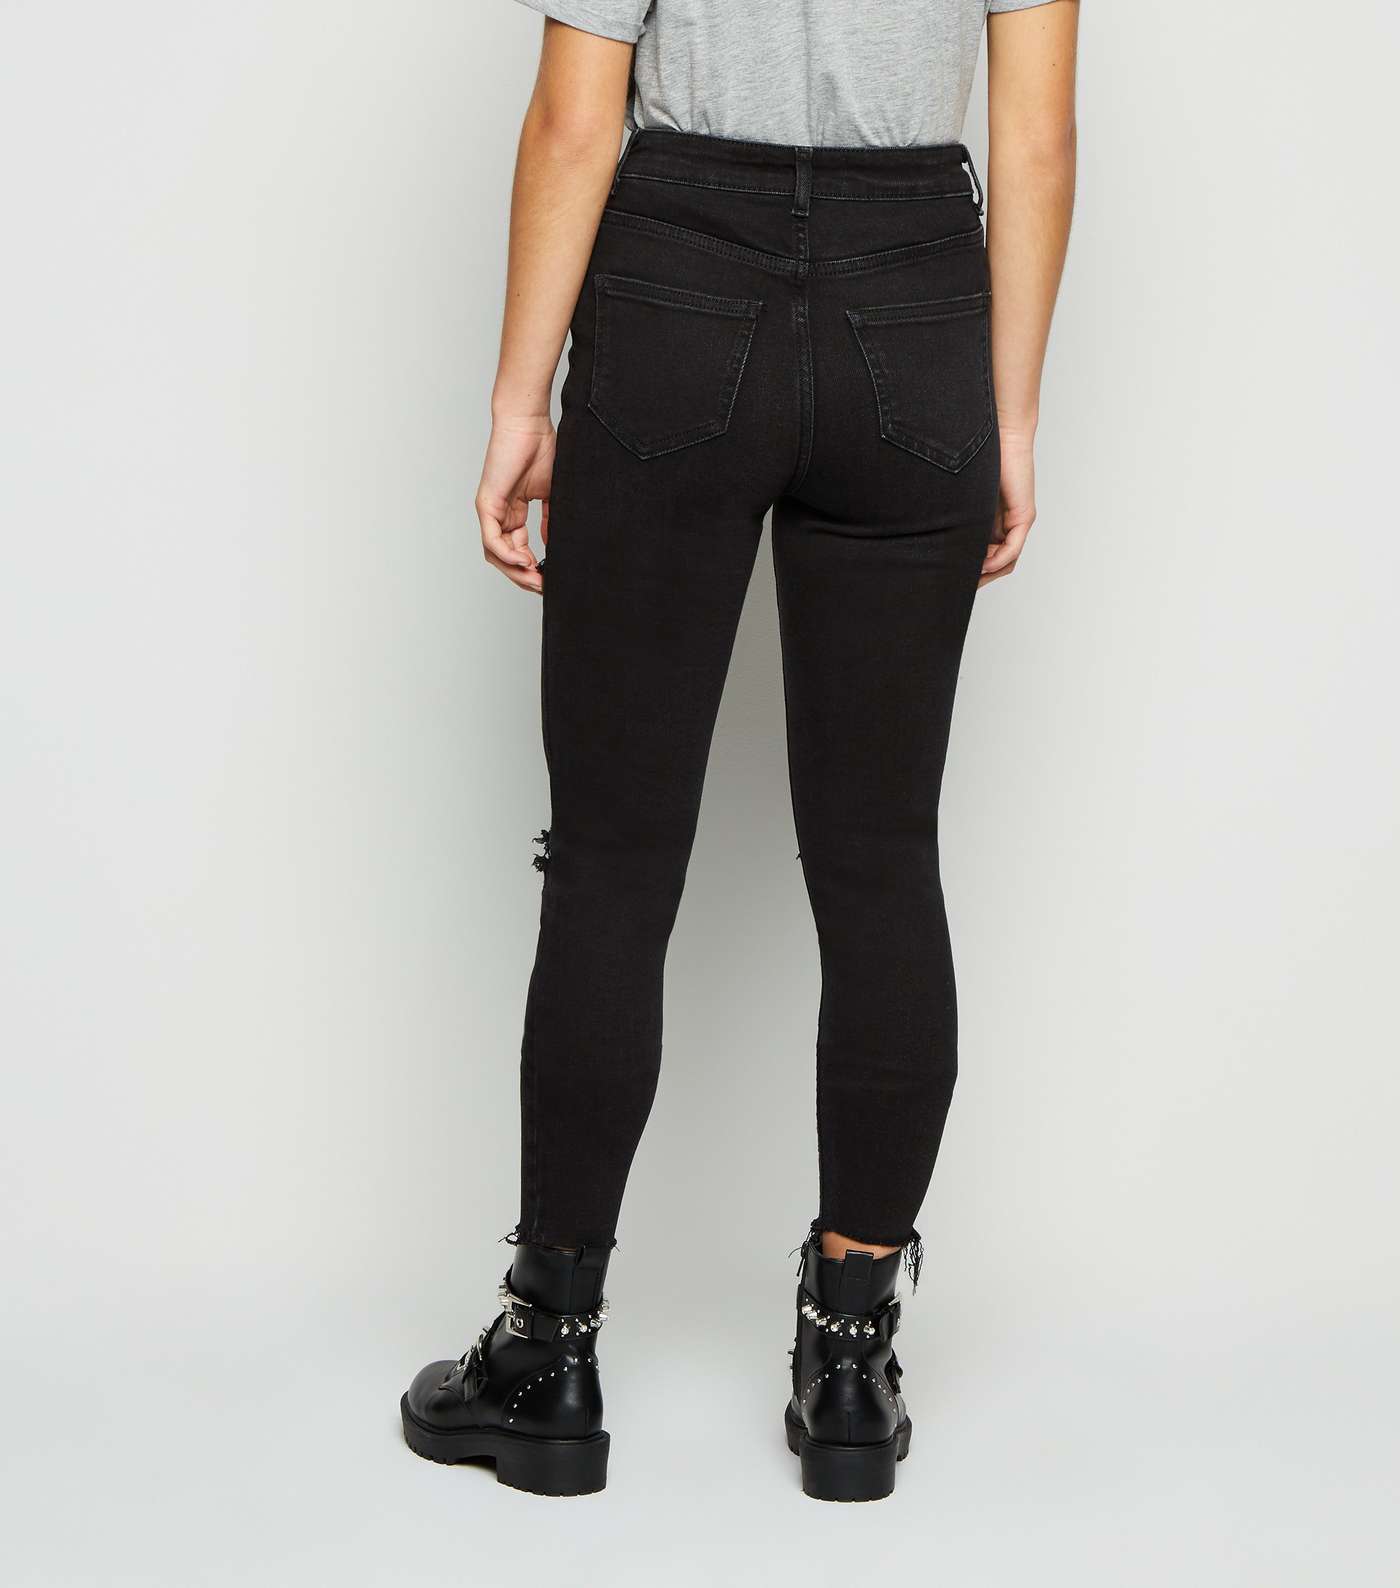 Petite Black Ripped Super Skinny Jeans Image 3